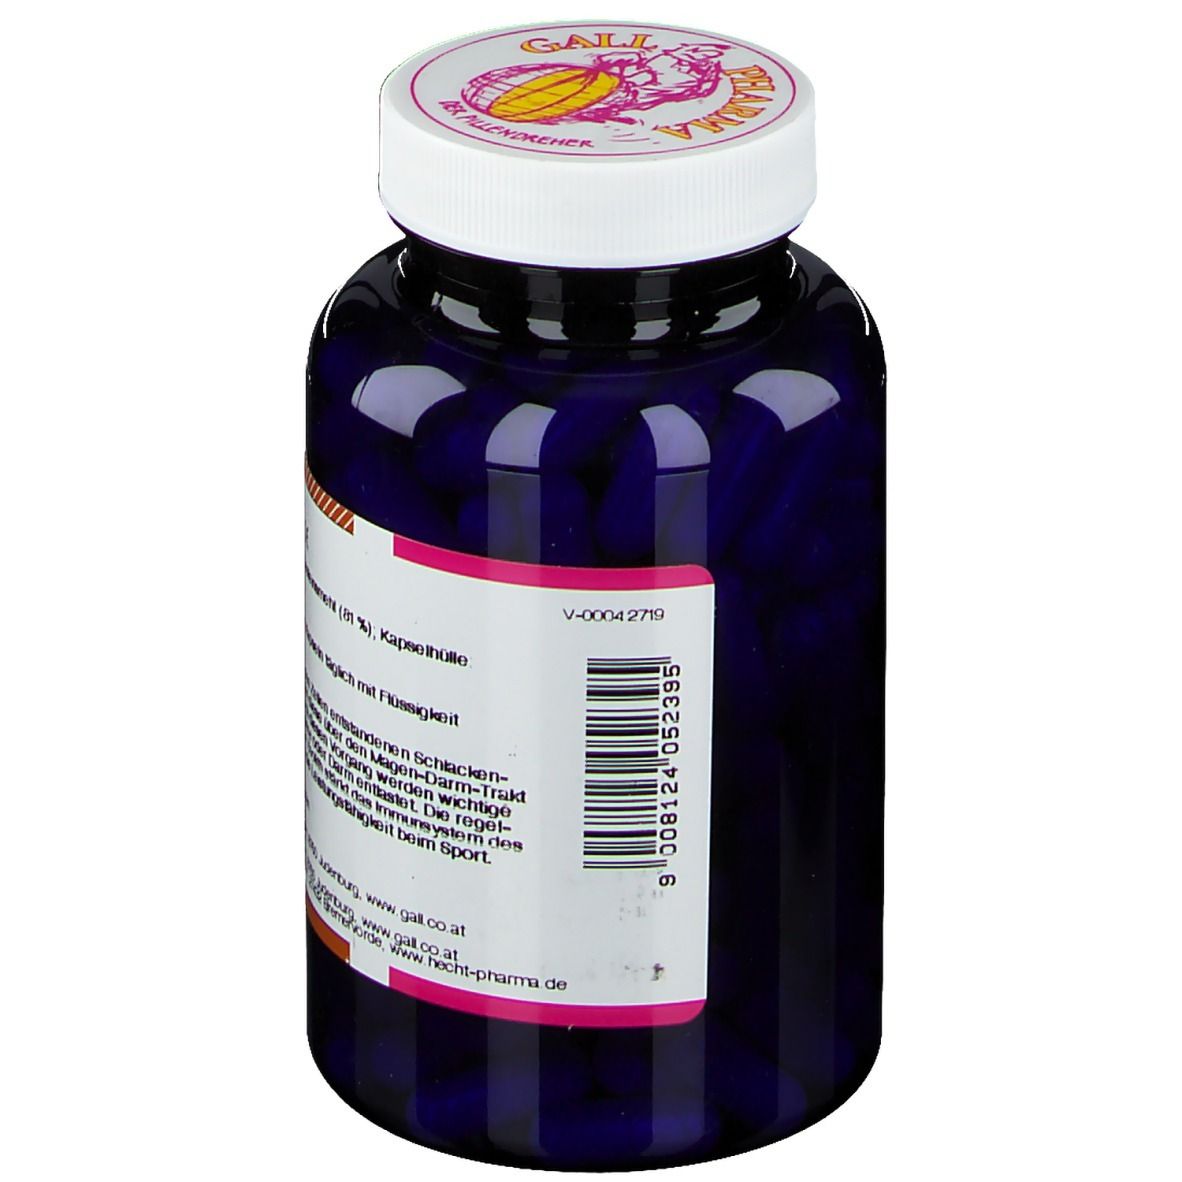 GALL PHARMA Zeolith 400 mg GPH Kapseln